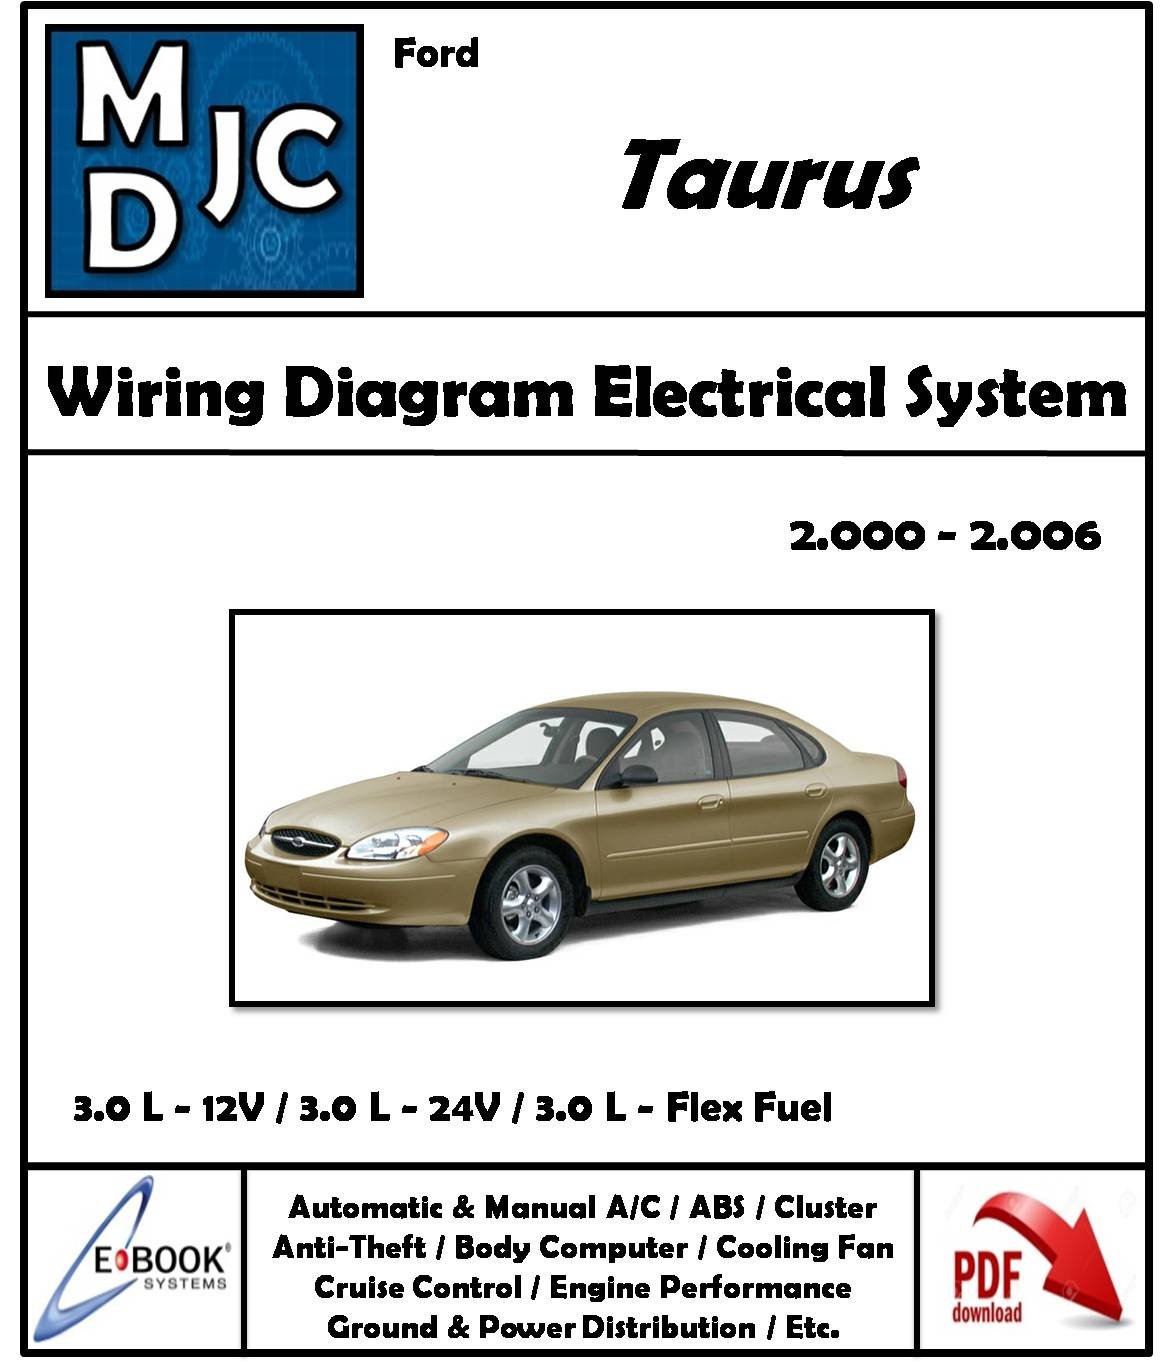 Ford Taurus 2000 - 2006